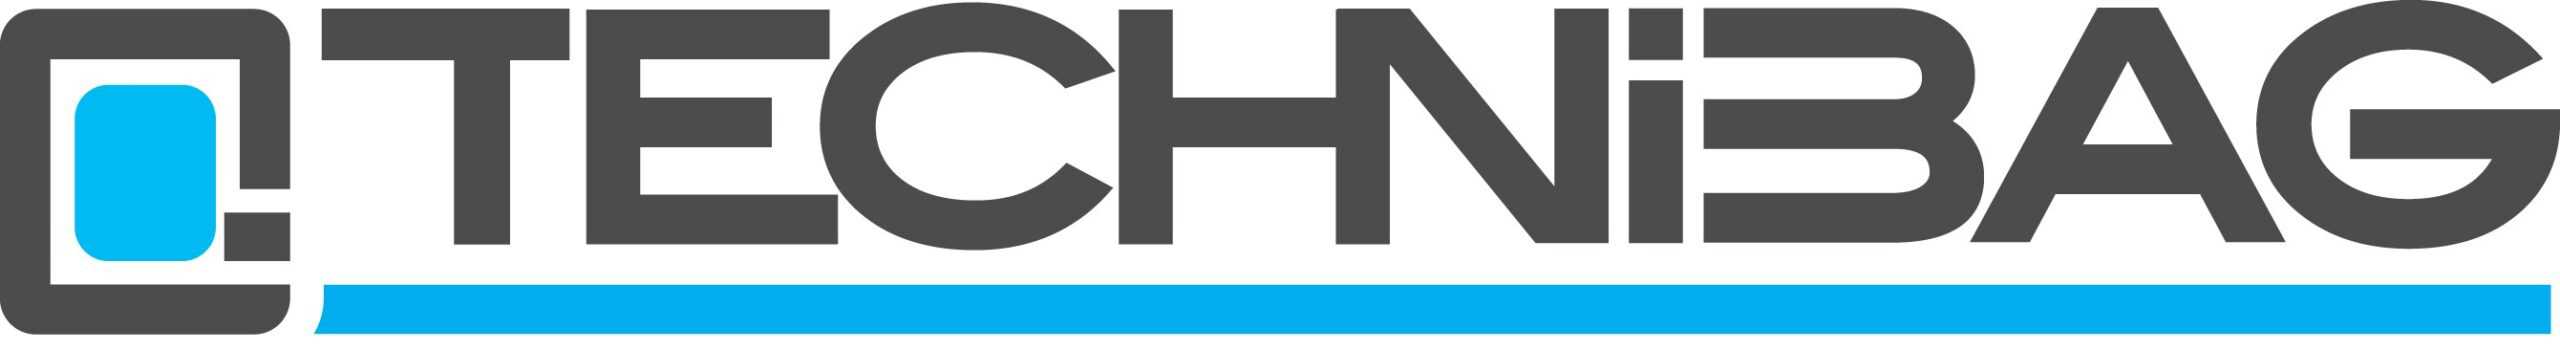 technibag logo